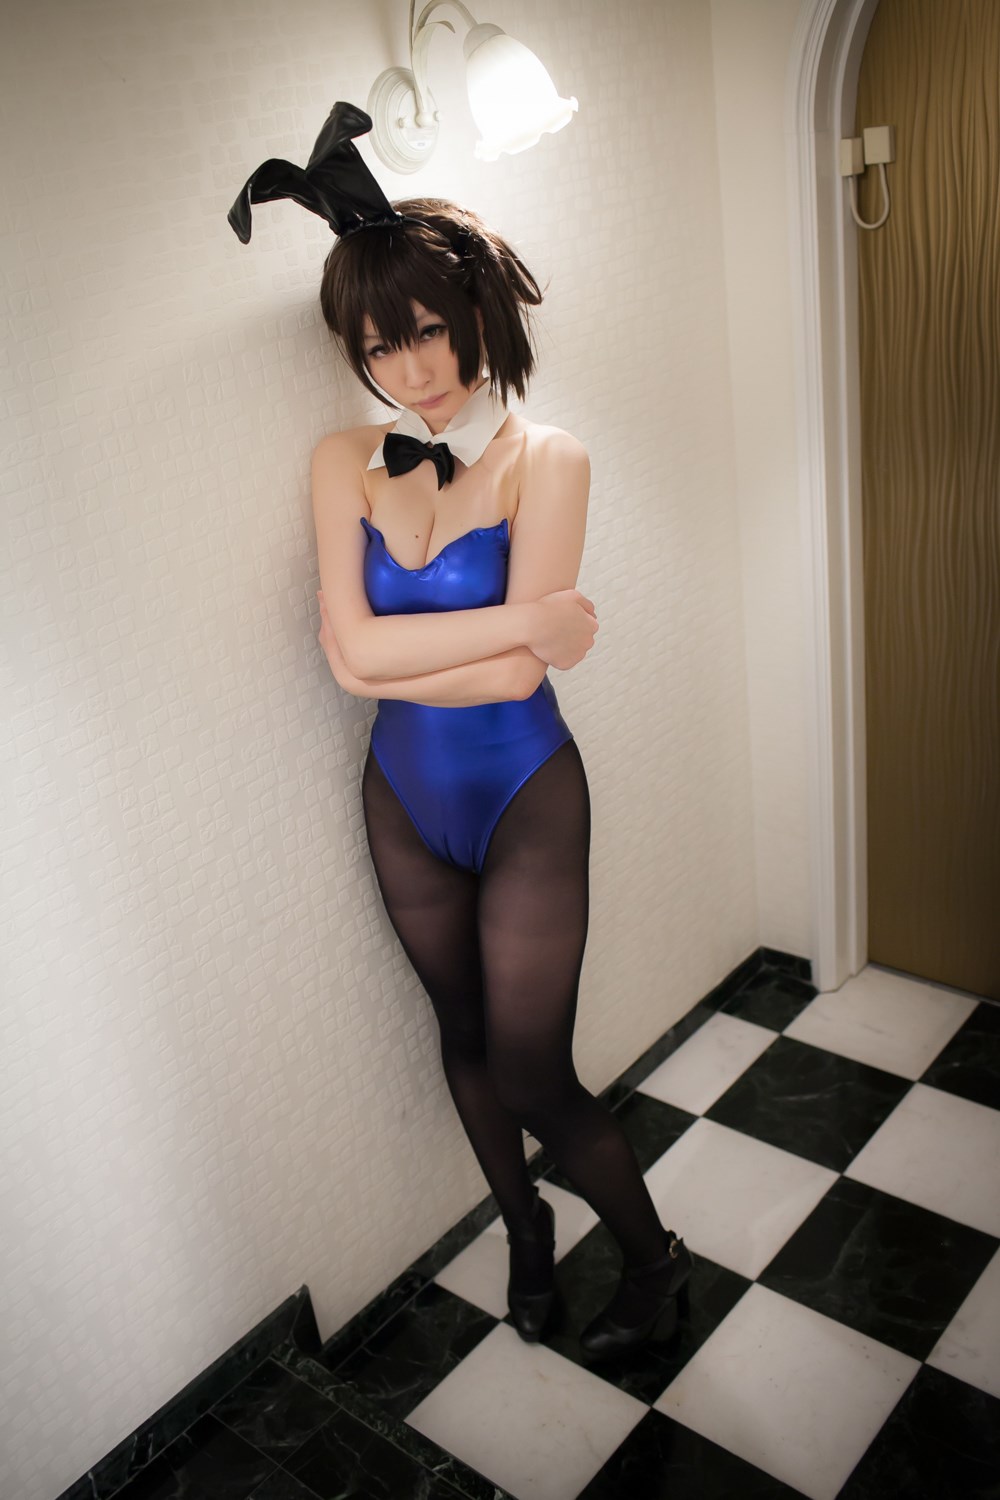 Rabbit suit Kaga animation reality show sexy stockings girl(11)